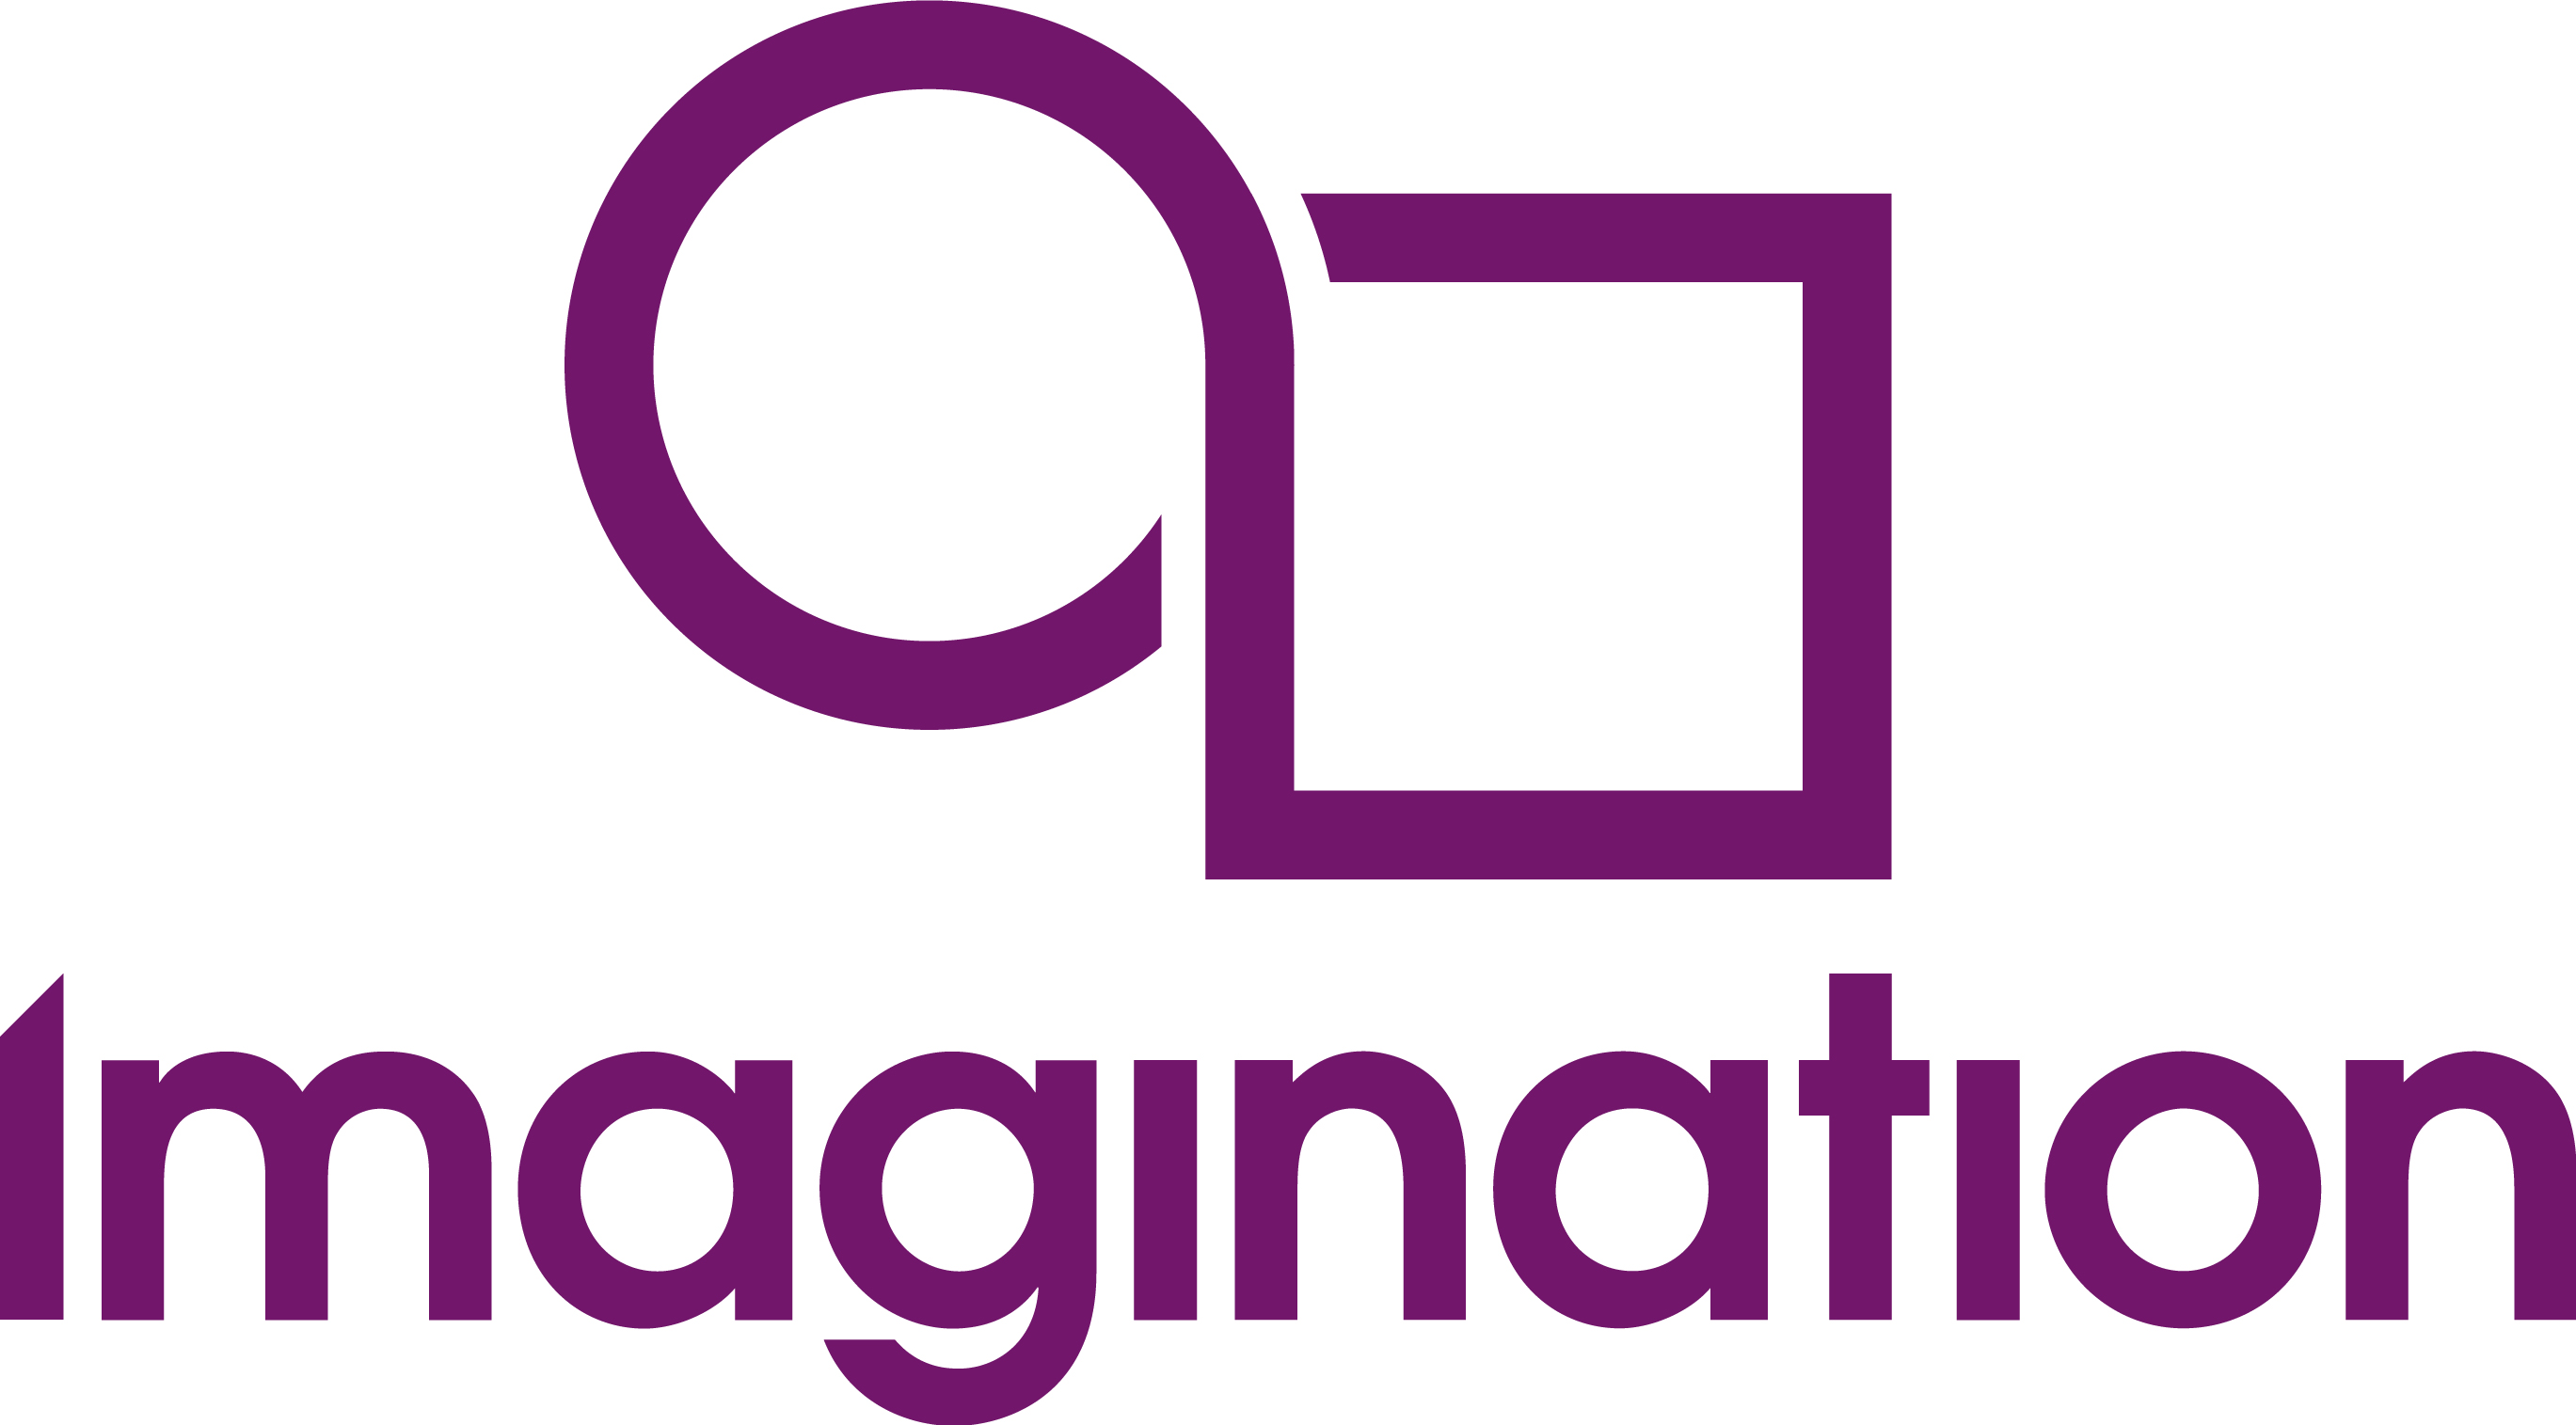 company: Imagination Technologies